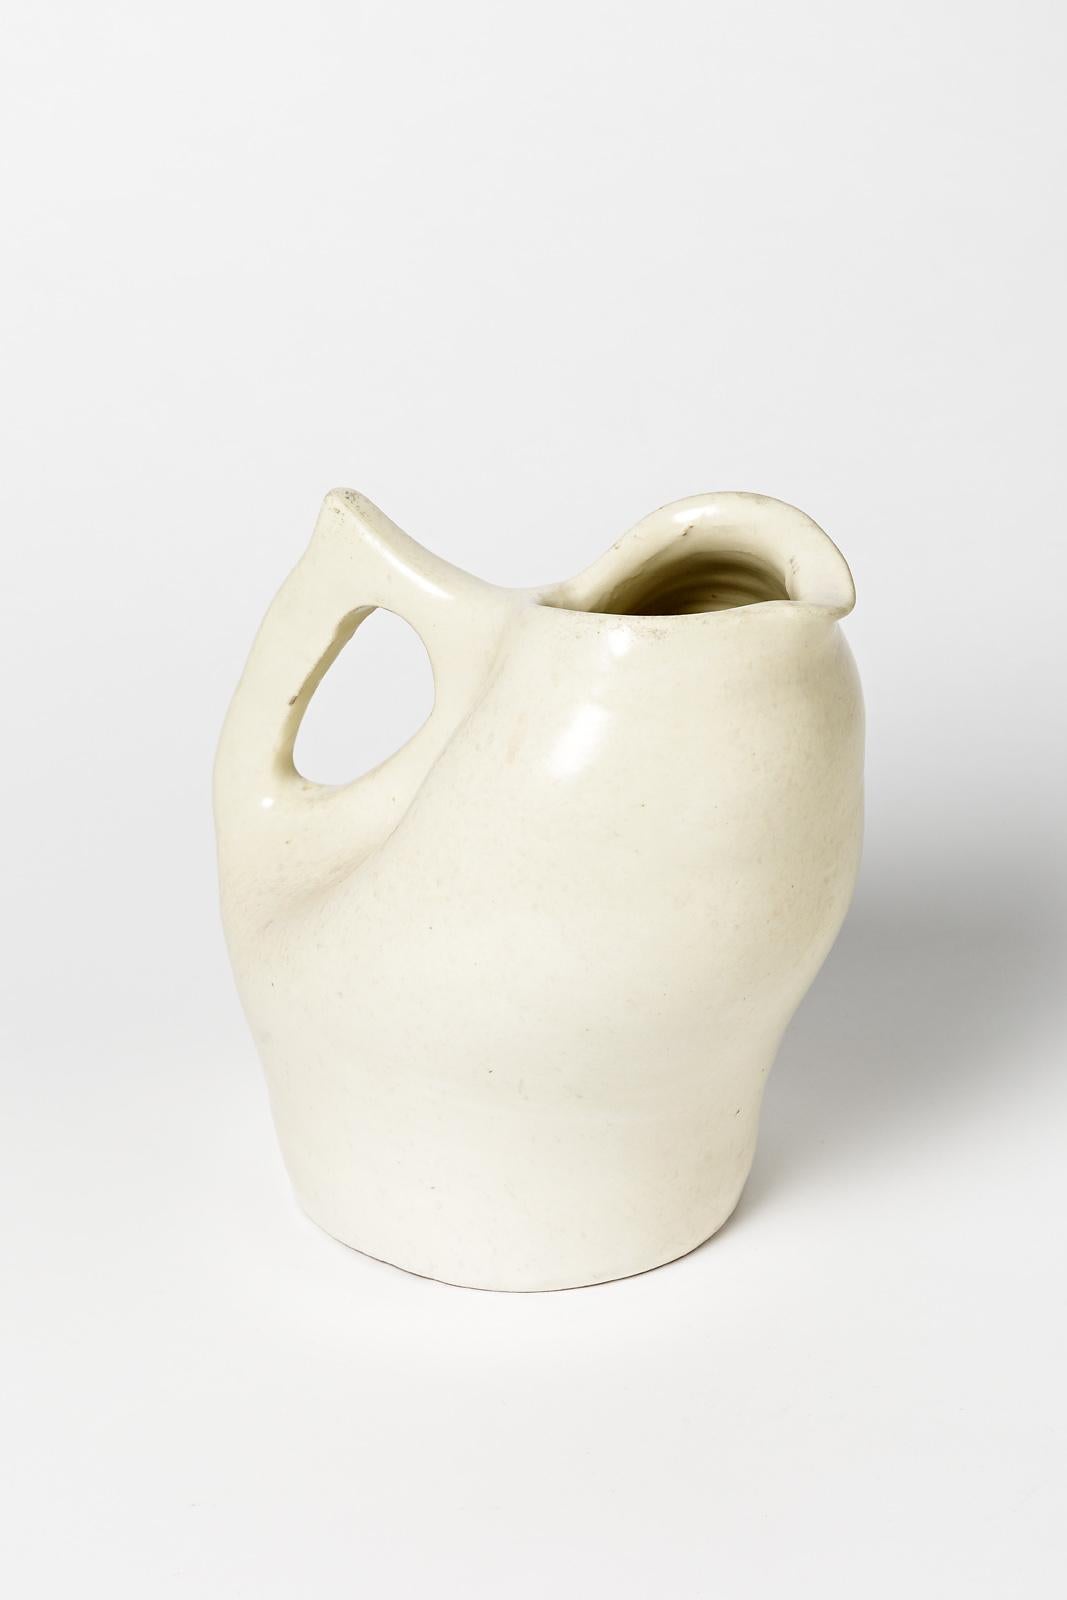 Elegant white ceramic pitcher.

Freeform bird pottery pitcher realized, circa 1950

Original perfect condition

Measures: Height 20cm, large 20cm.